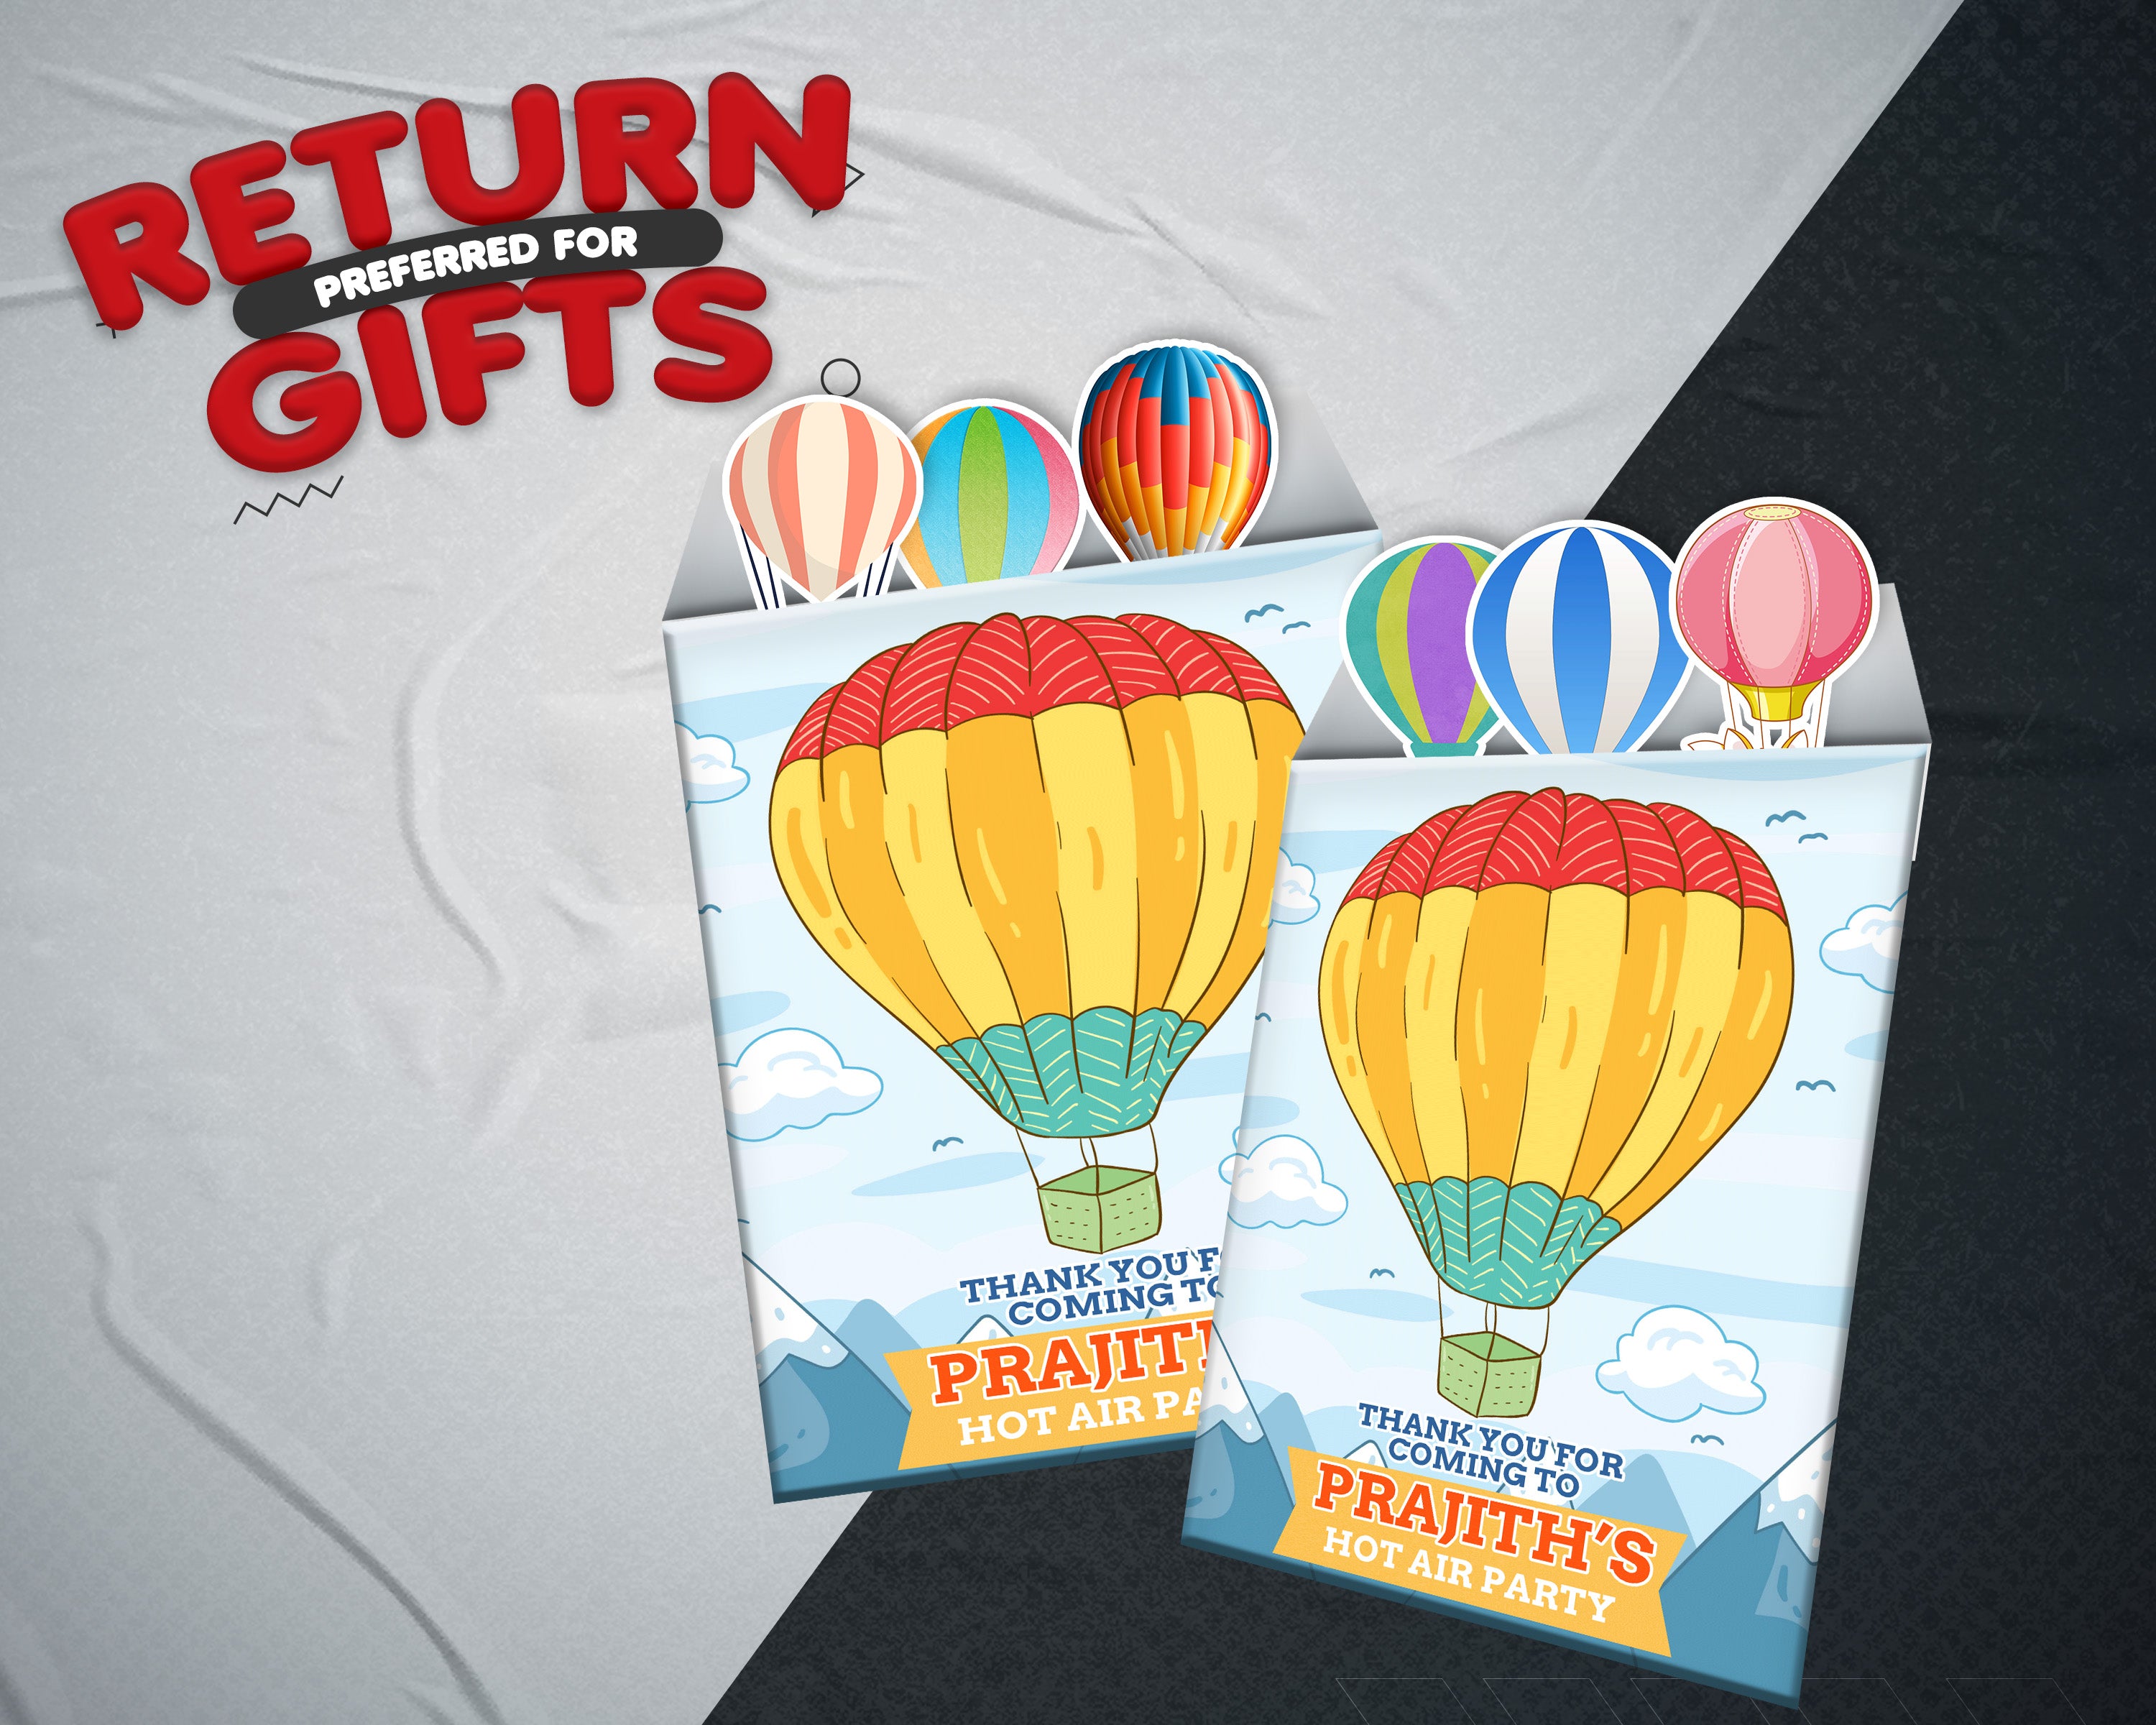 Hot Air Theme Mini Magnetic Return Gift Pack